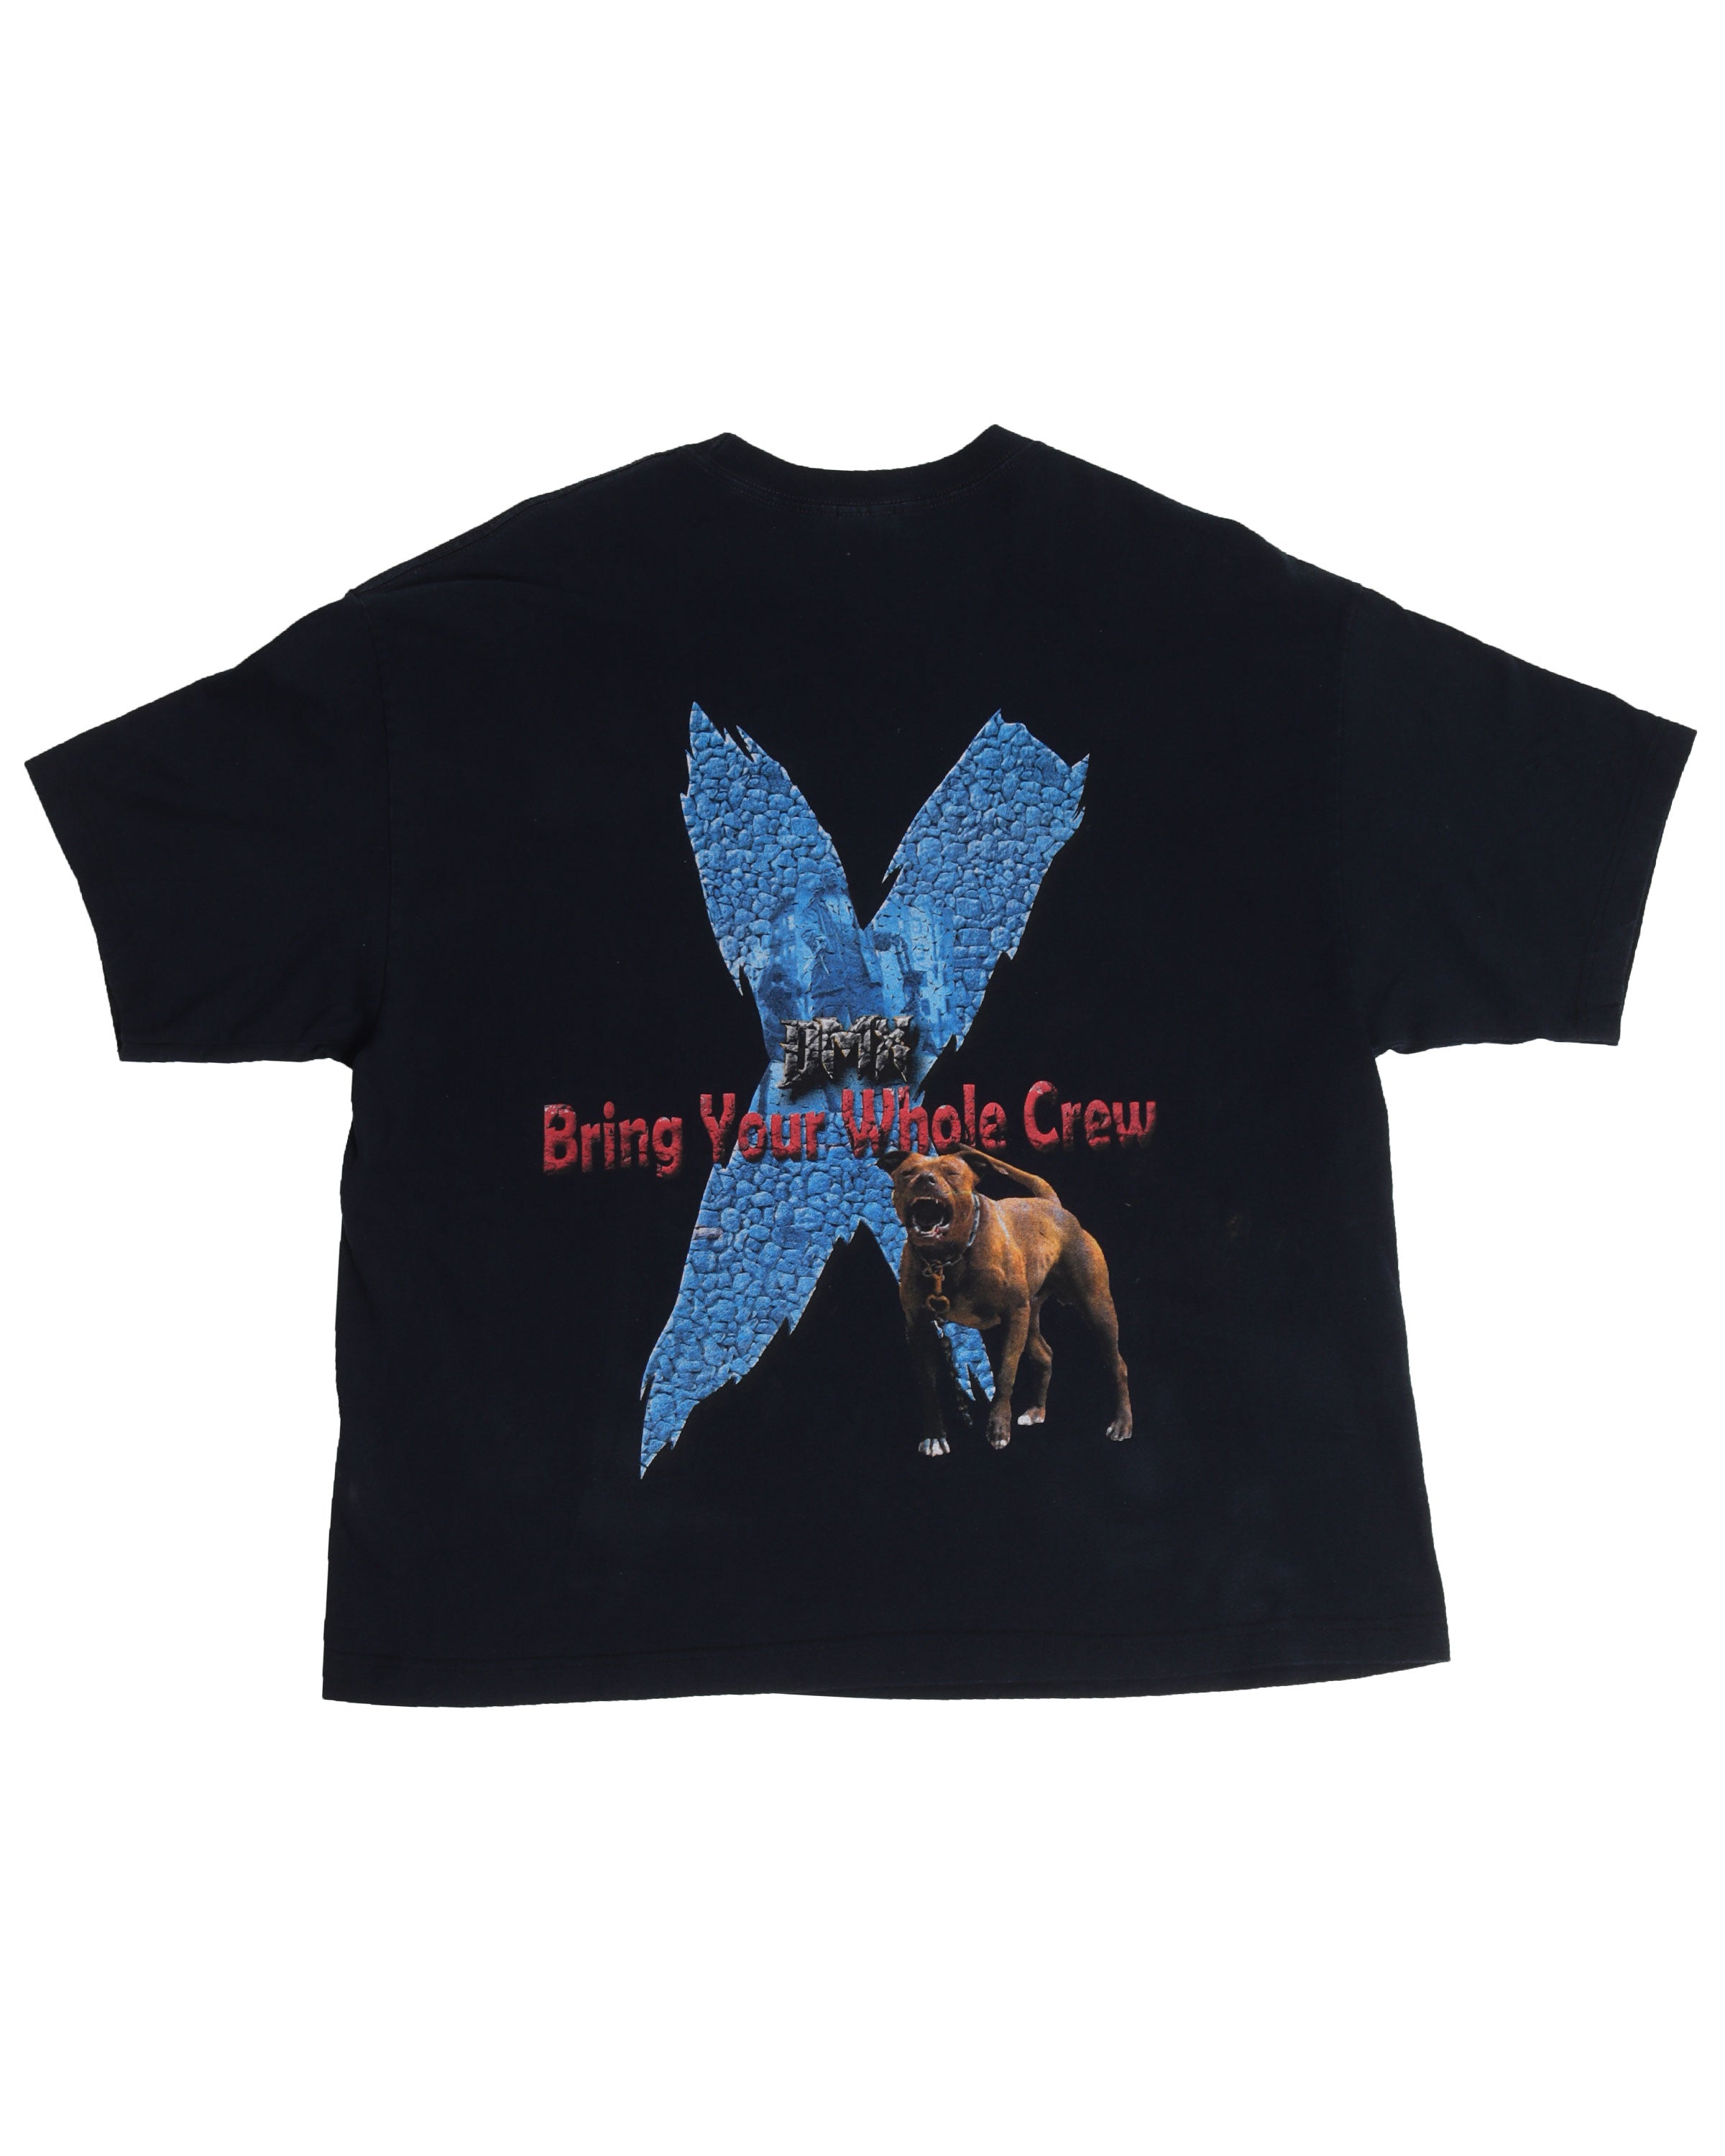 DMX "Bring Your Whole Crew" T-Shirt